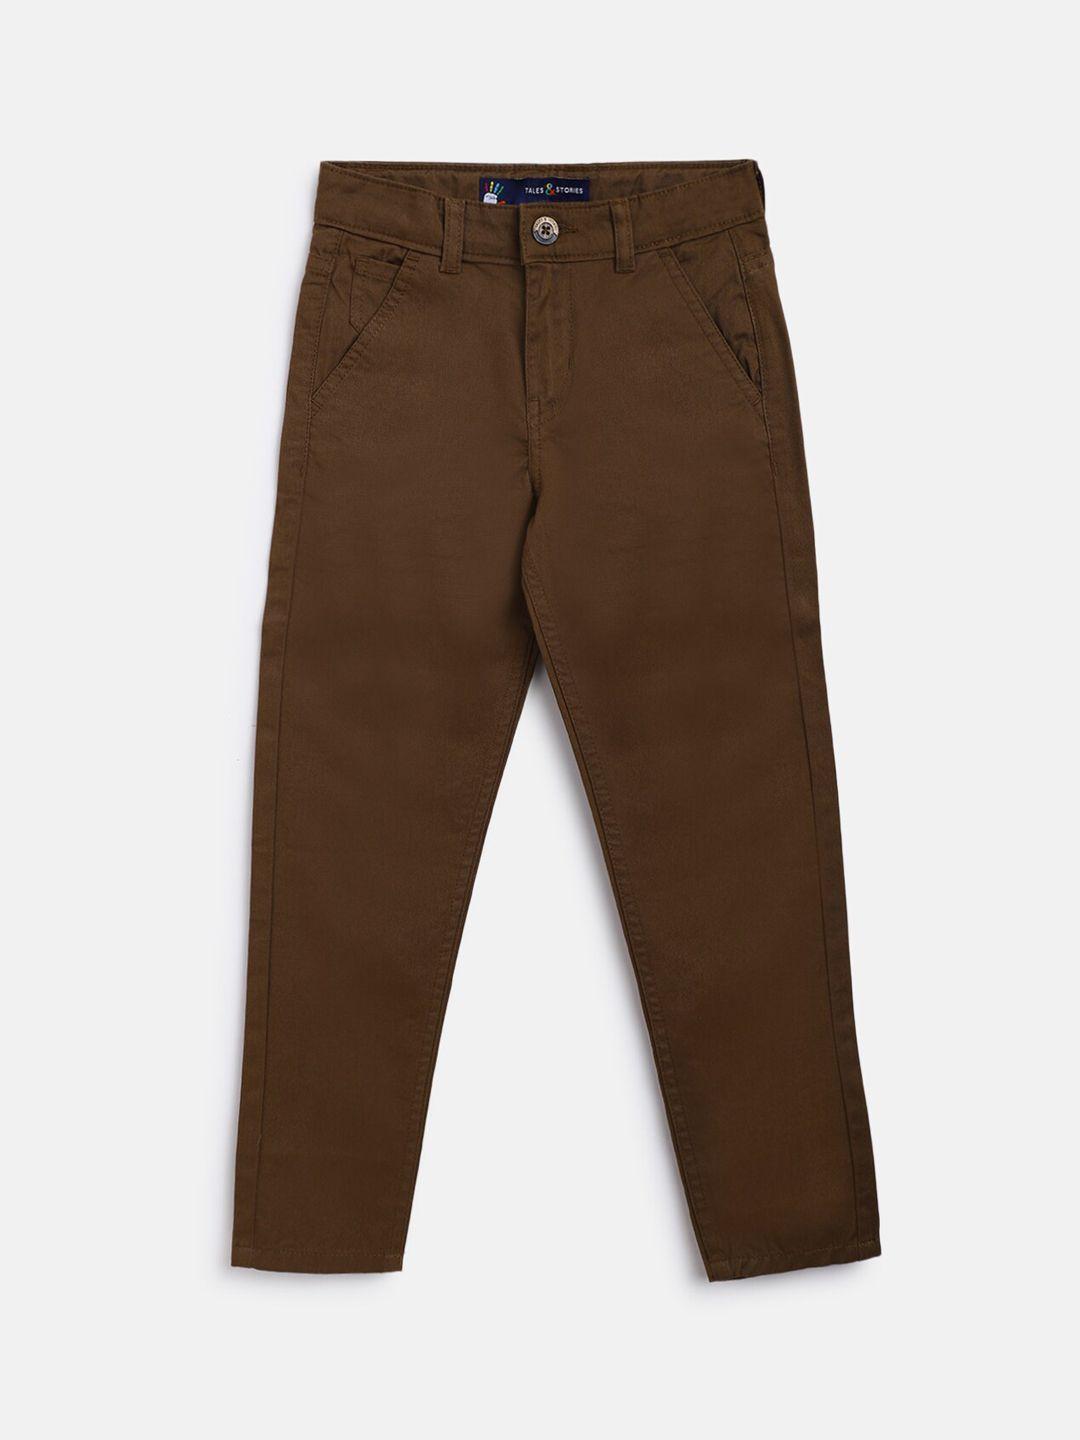 tales & stories boys brown slim fit chinos trouser